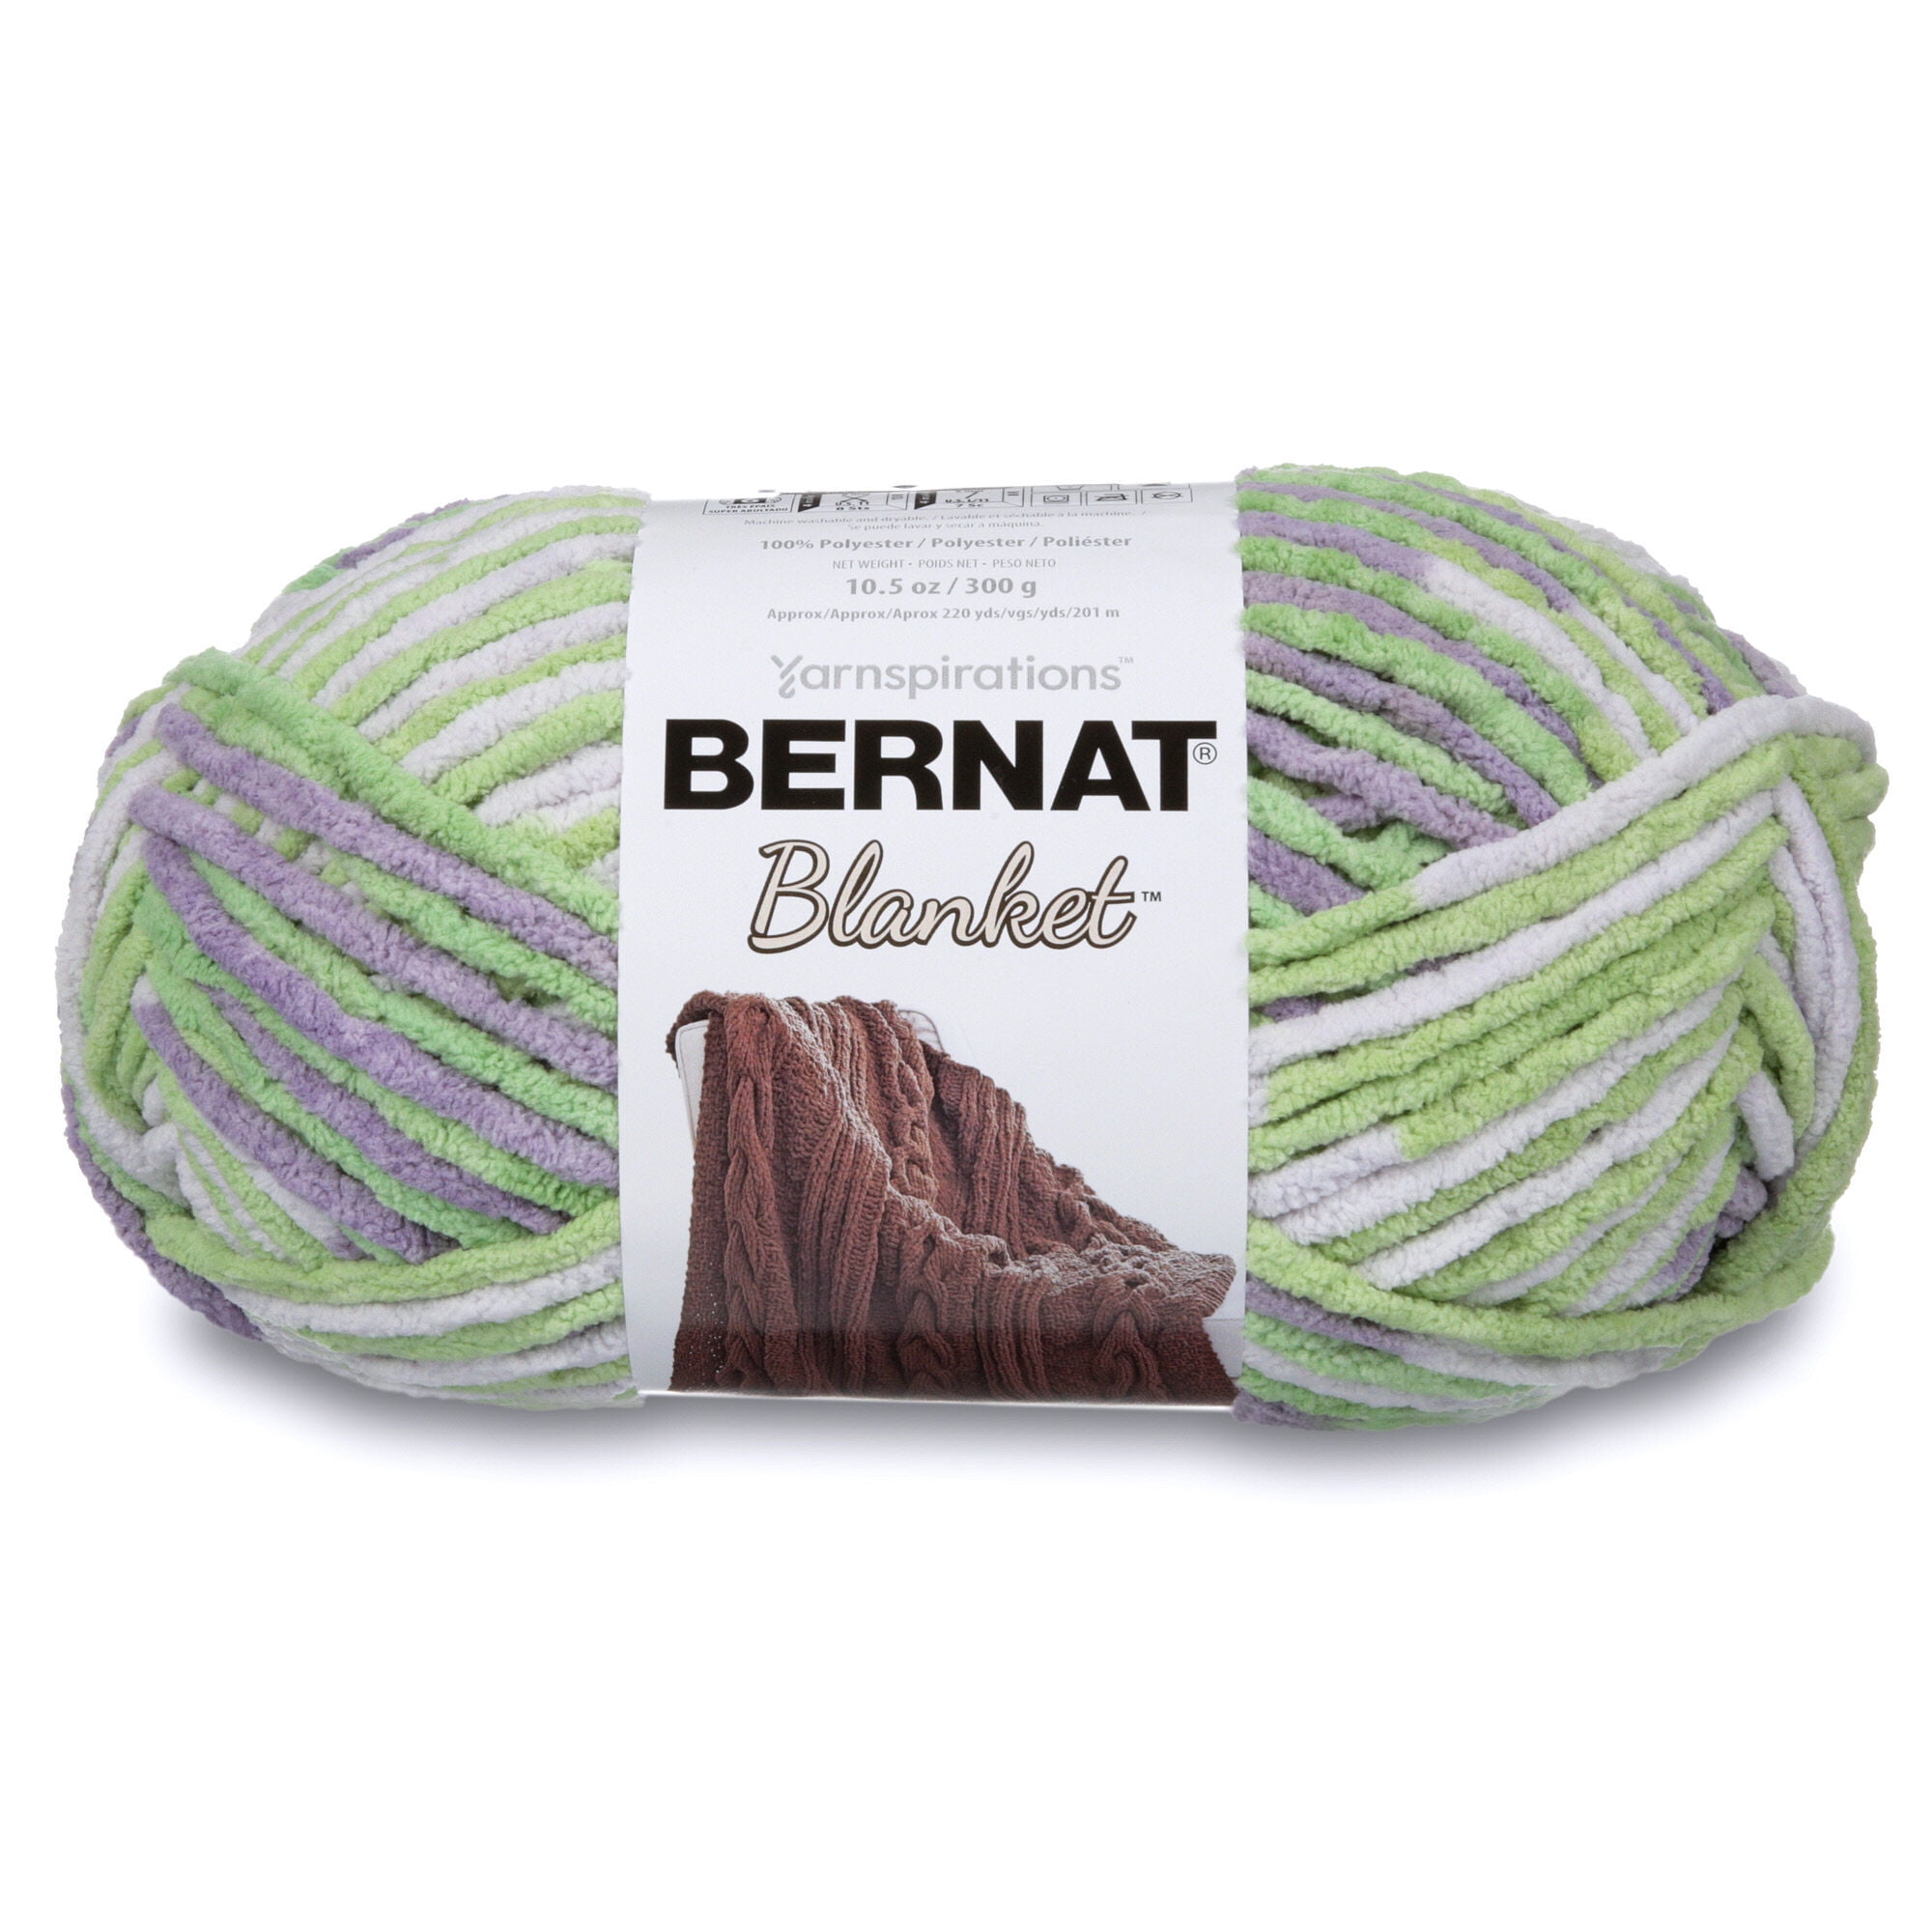 Bernat Blanket Extra Gray Orchid Yarn - 2 Pack of 300g/10.5oz - Polyester - 7 Jumbo - 97 Yards - Knitting, Crocheting, Crafts & Amigurumi